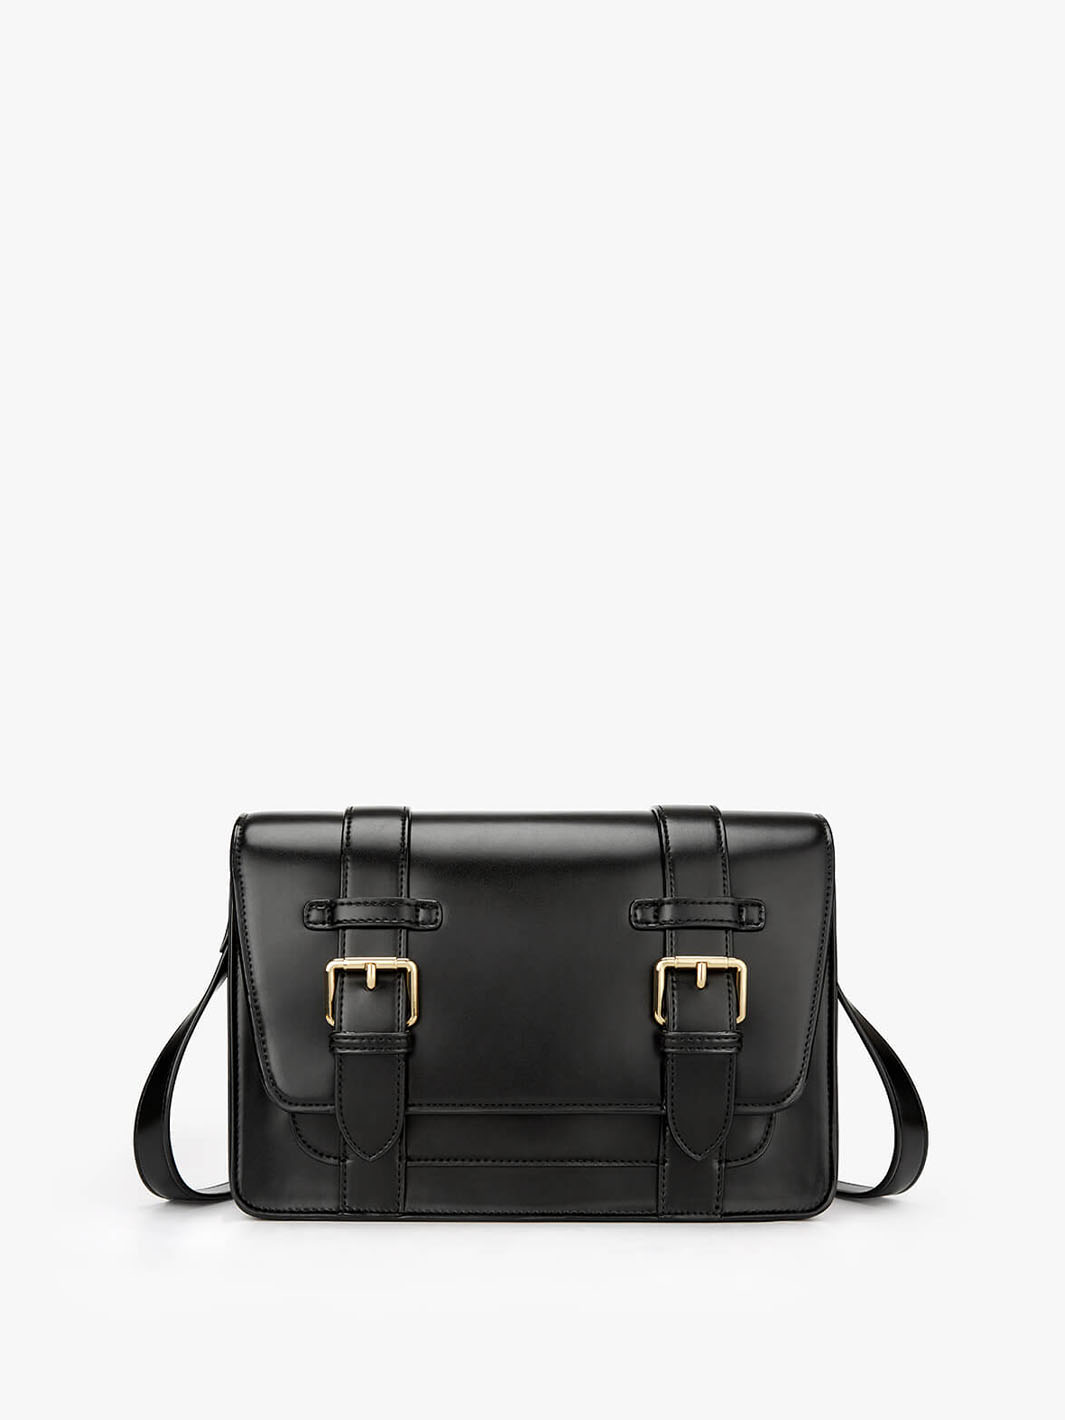 Black Crossbody Bag with Classic Design - ECOSUSI Jane Bag